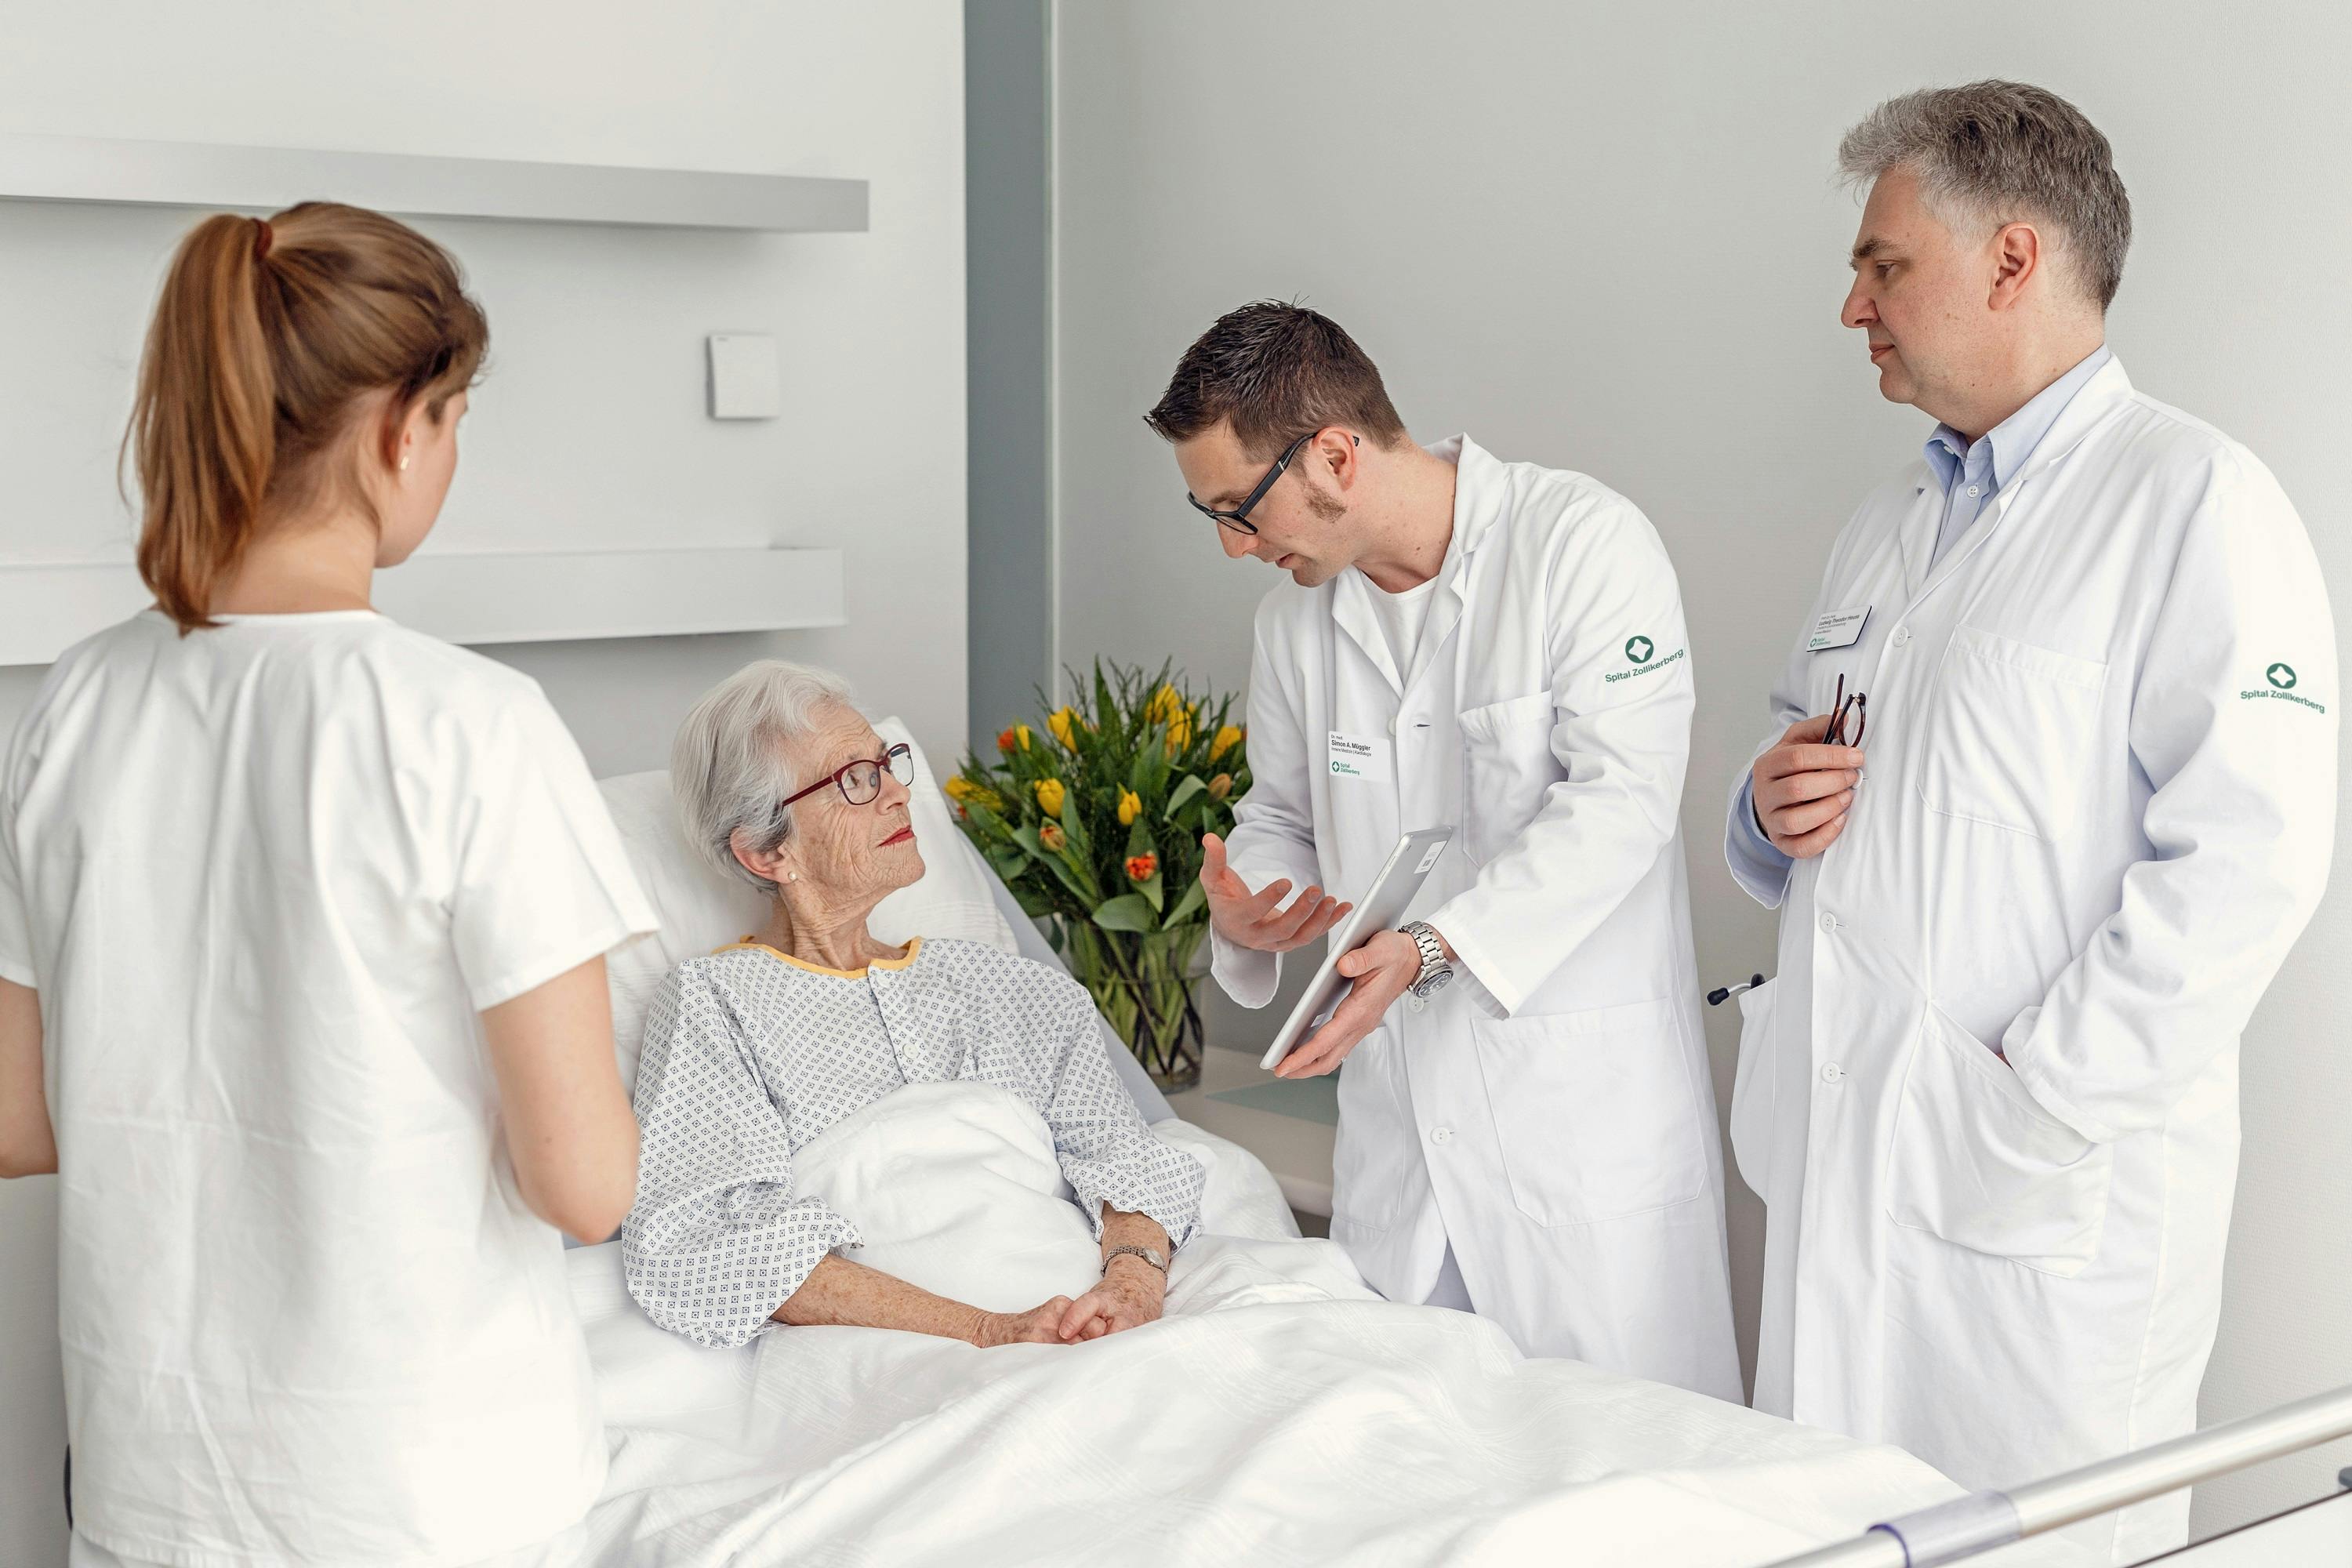 Senior citizen in hospital bed talks to medical team.